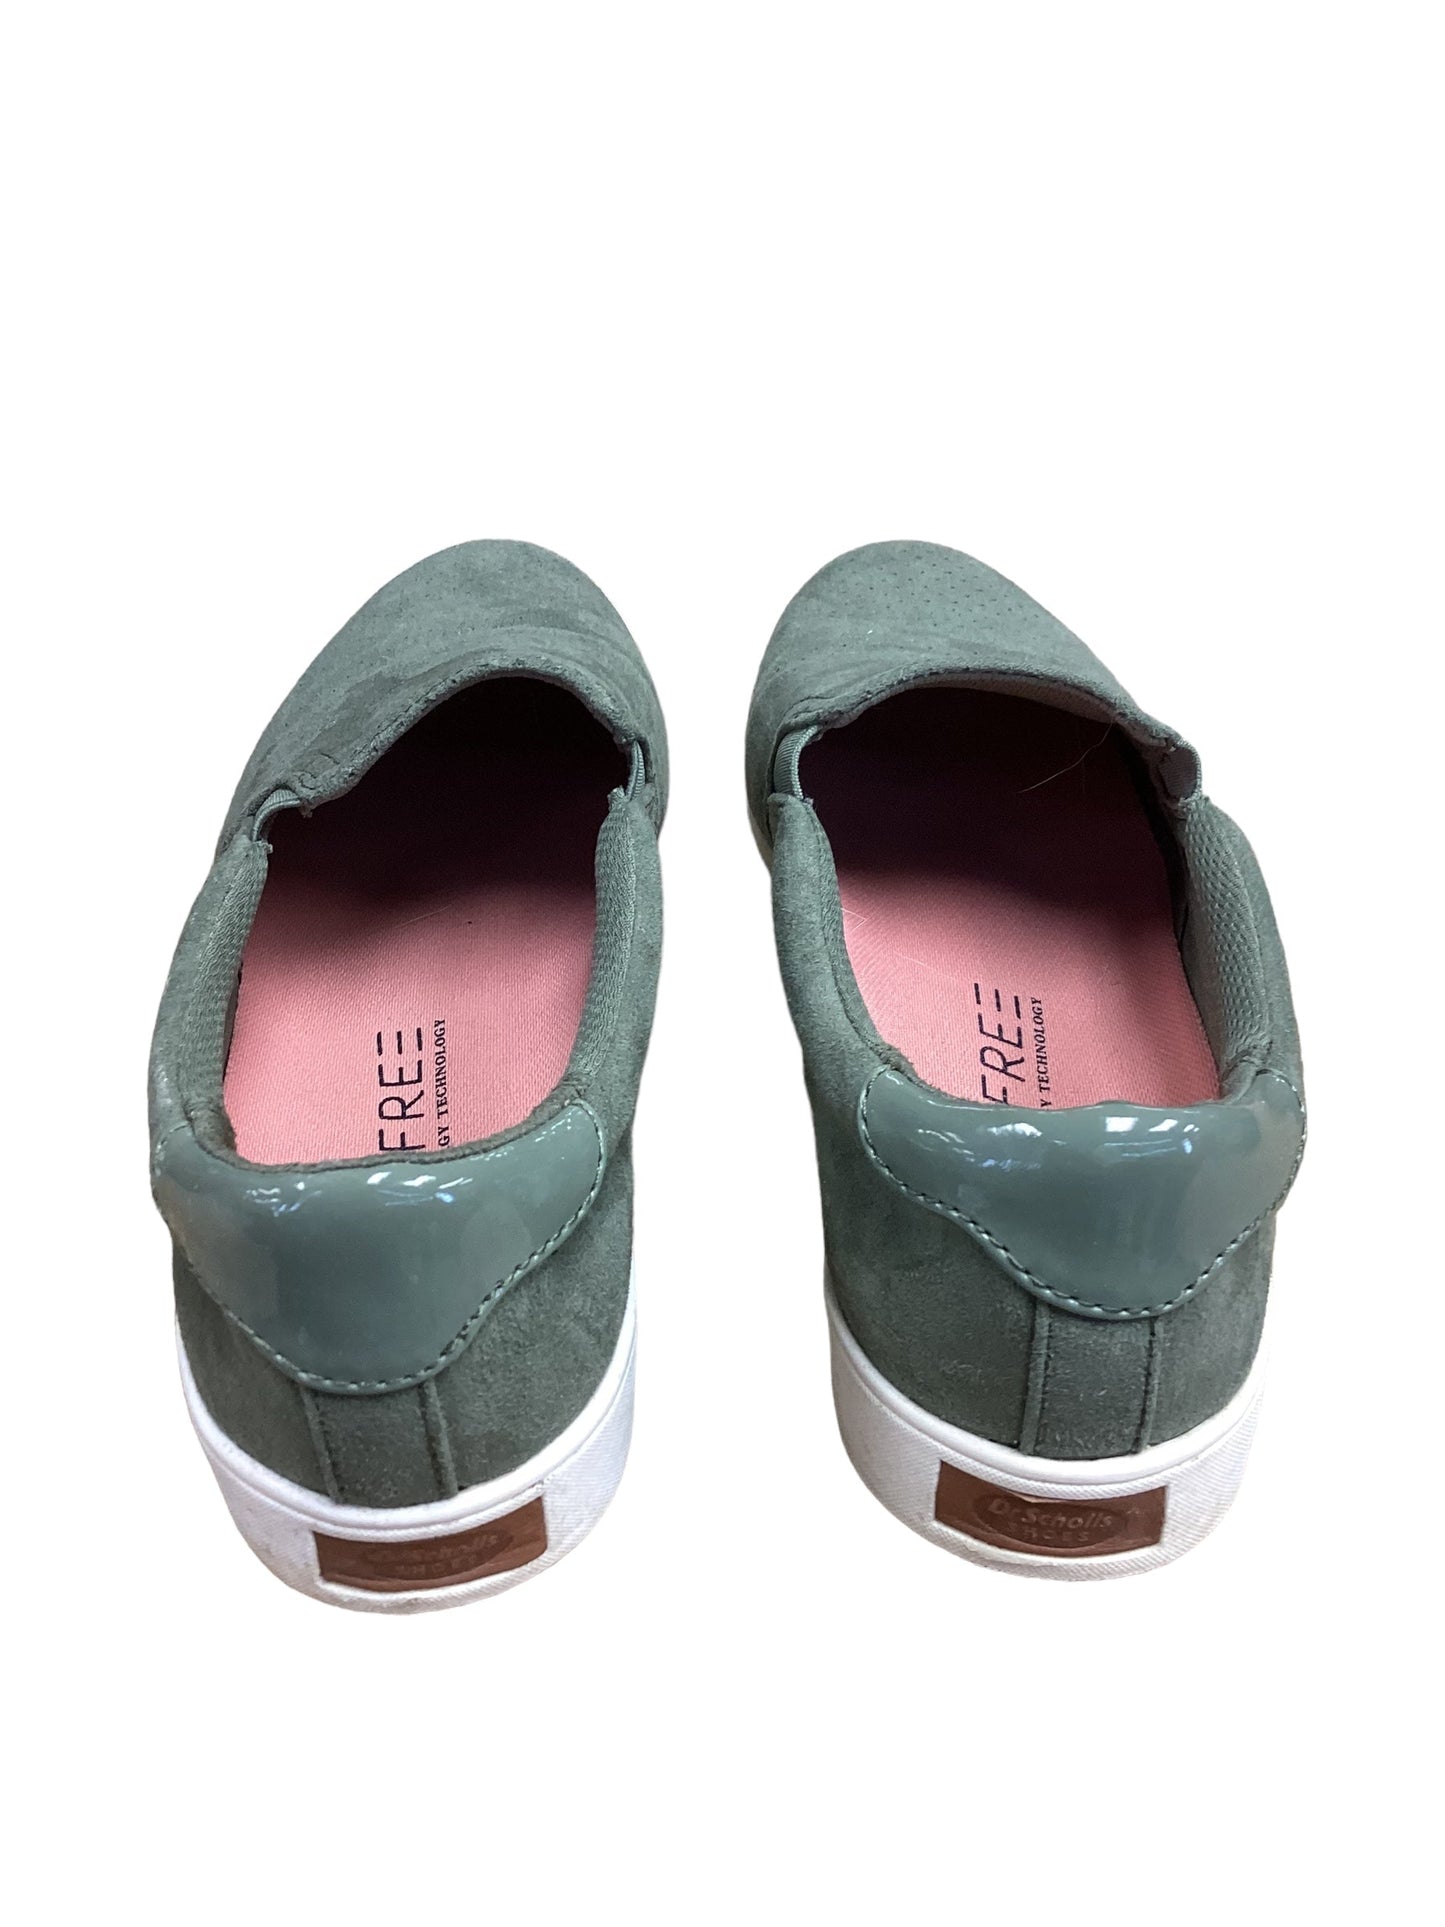 Green Shoes Flats Dr Scholls, Size 7.5